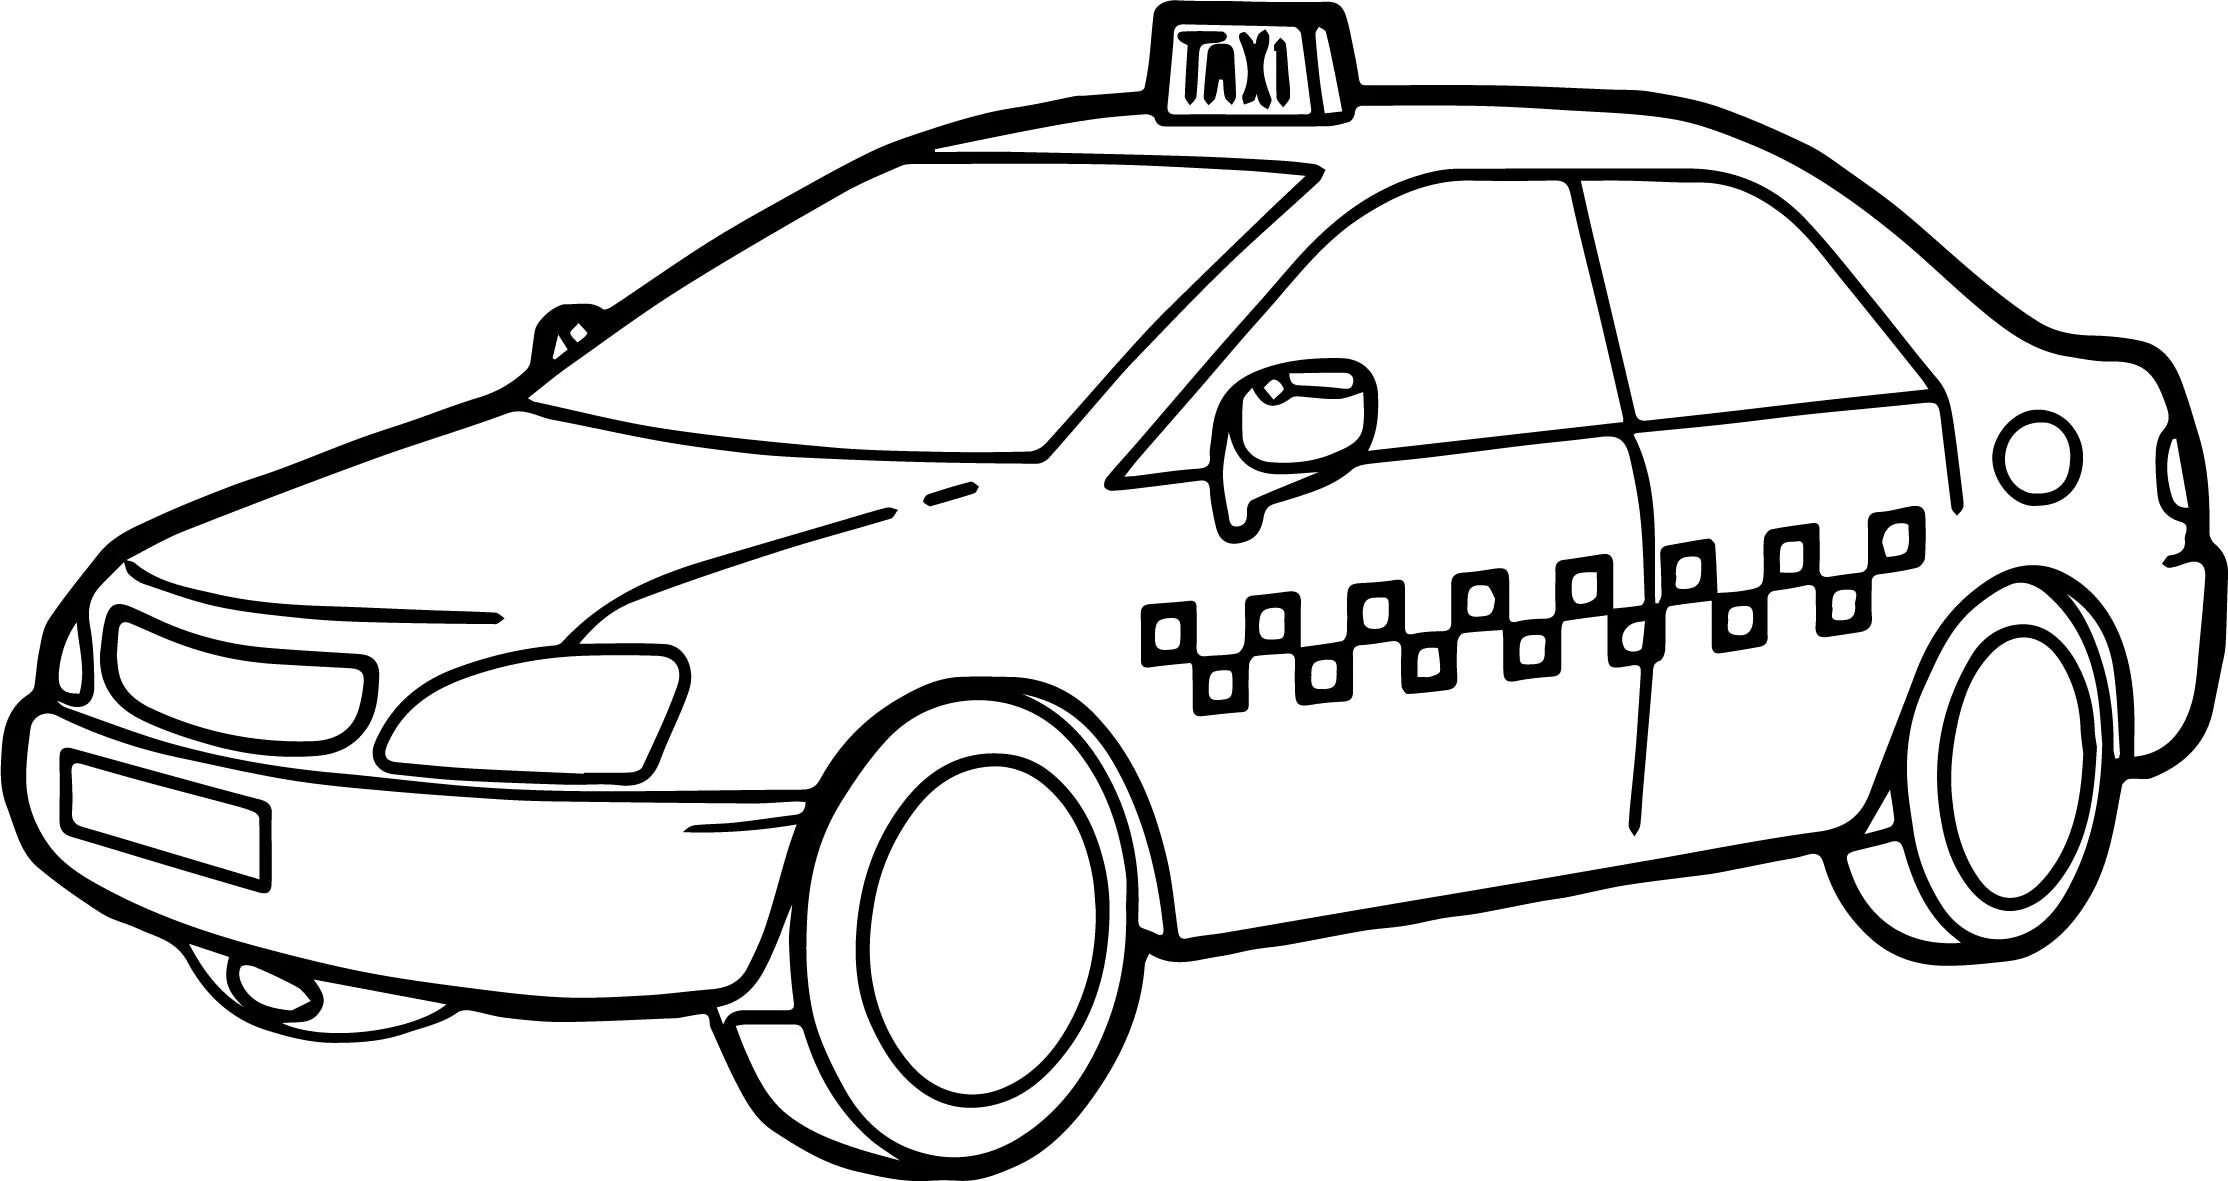 Раскраска сказочная машина такси